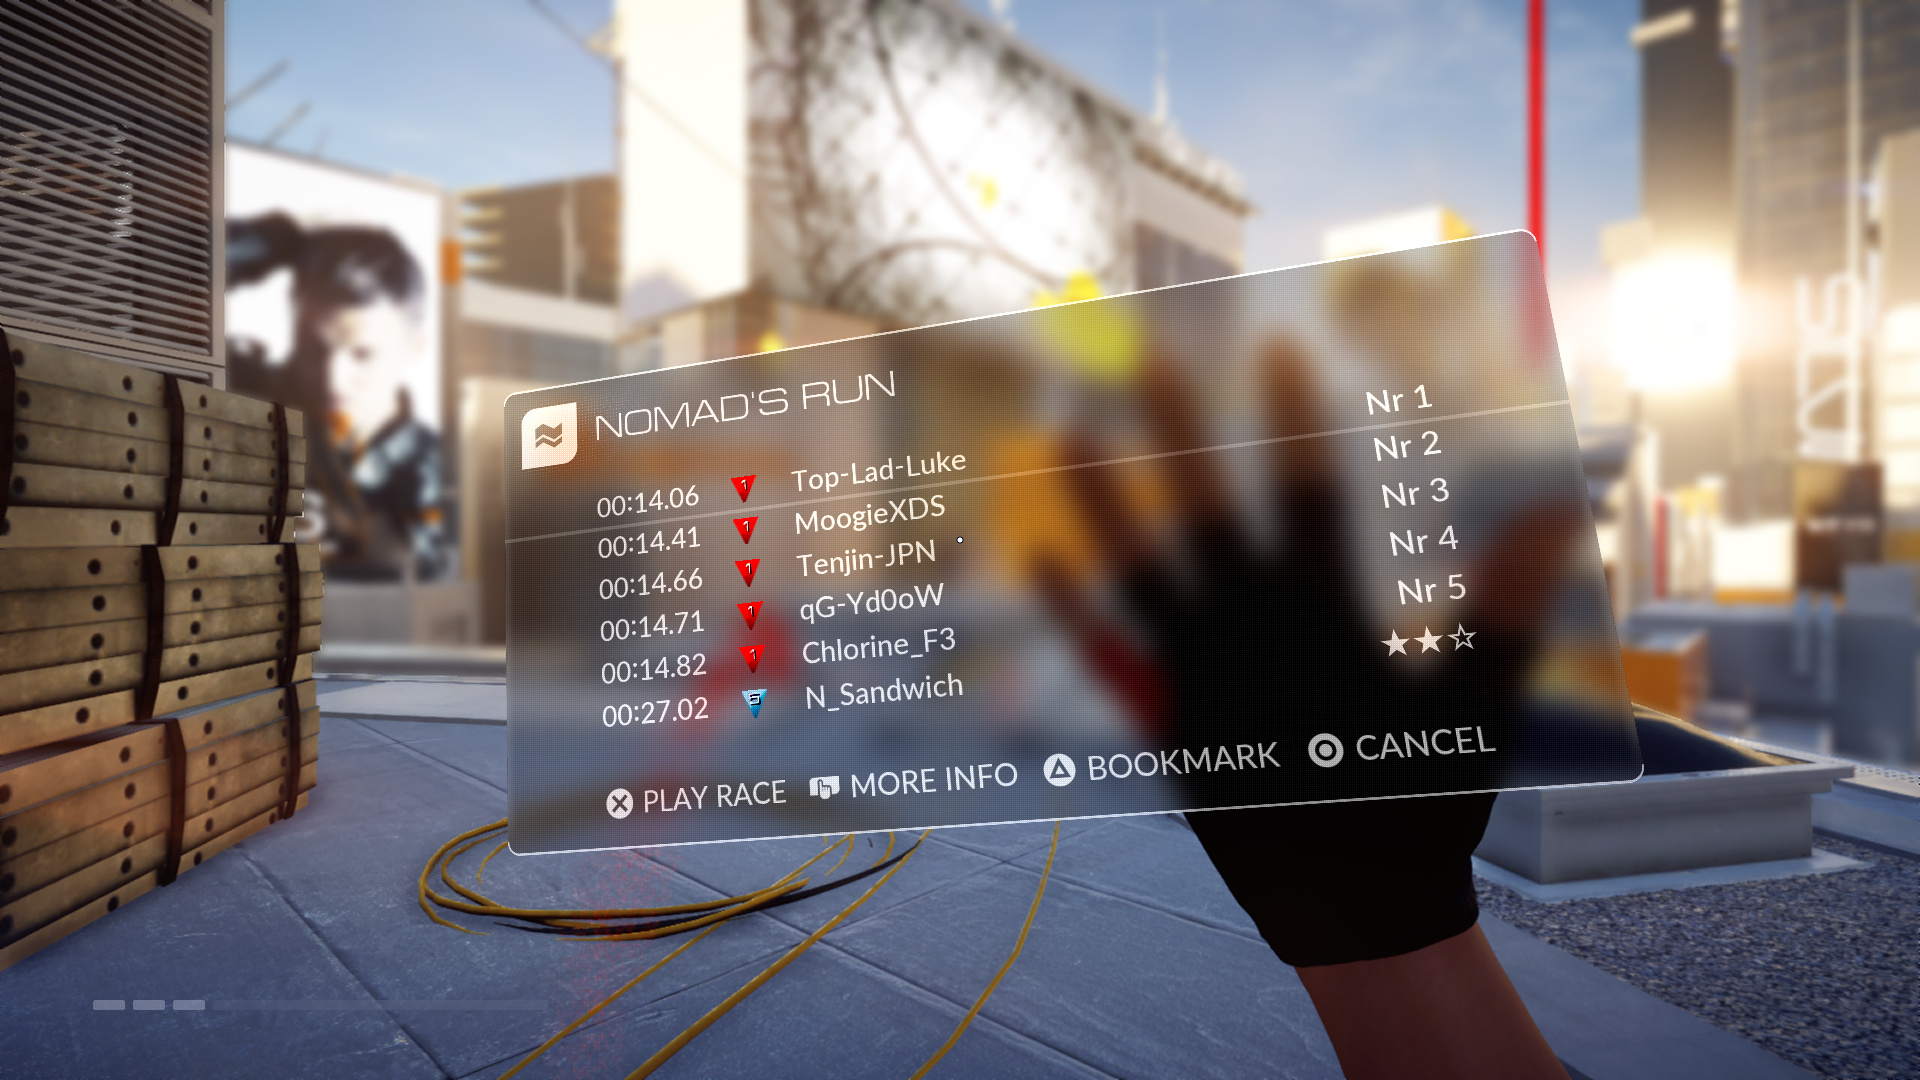 Mirror's Edge Multiplayer Mod - Mirror's Edge - Unmoddable